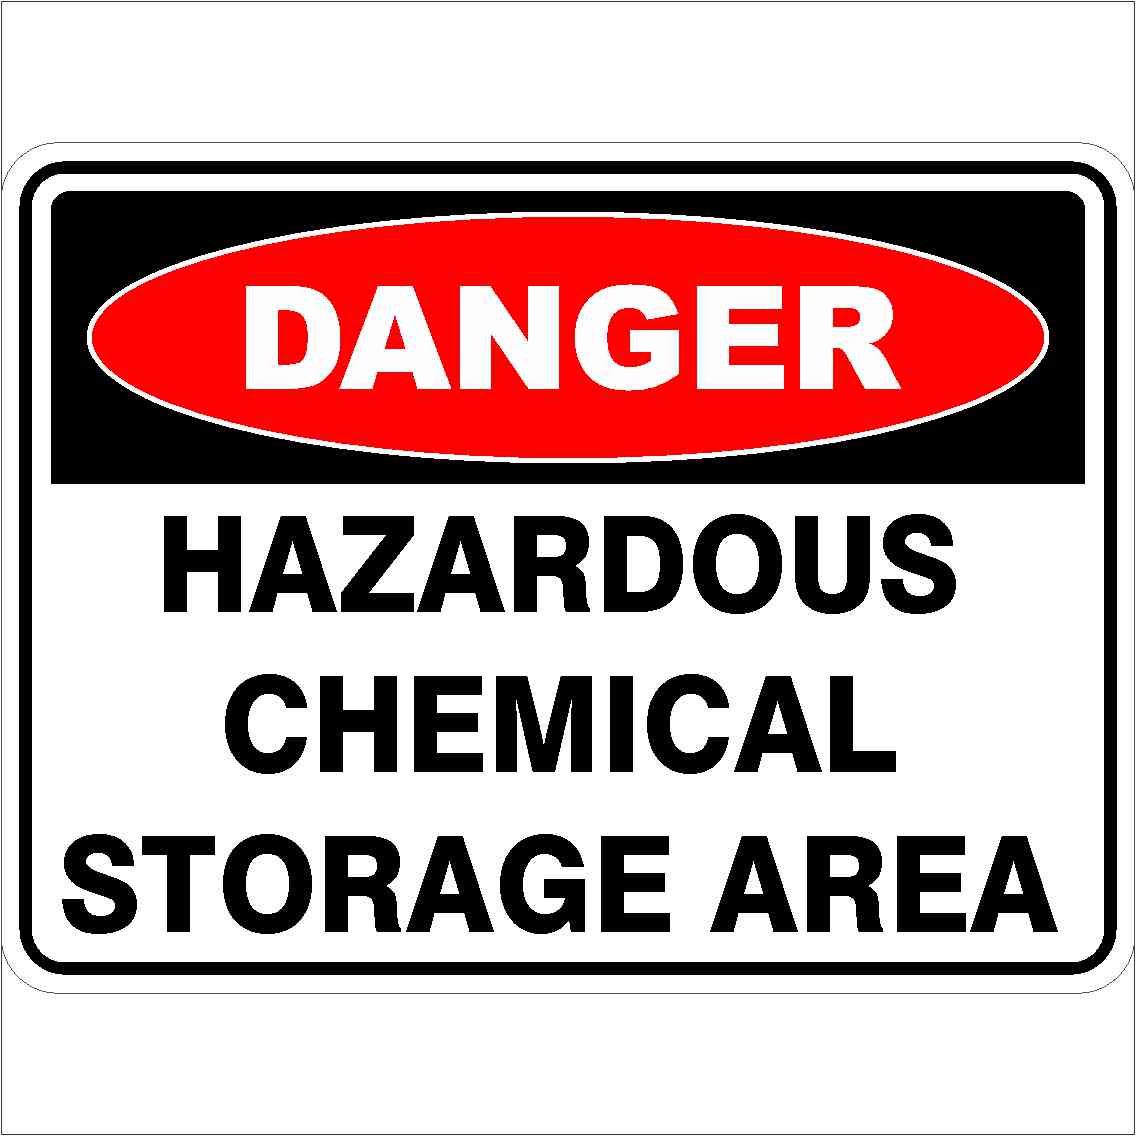 Danger - Hazardous Chemical Storage Area - Safety Sign